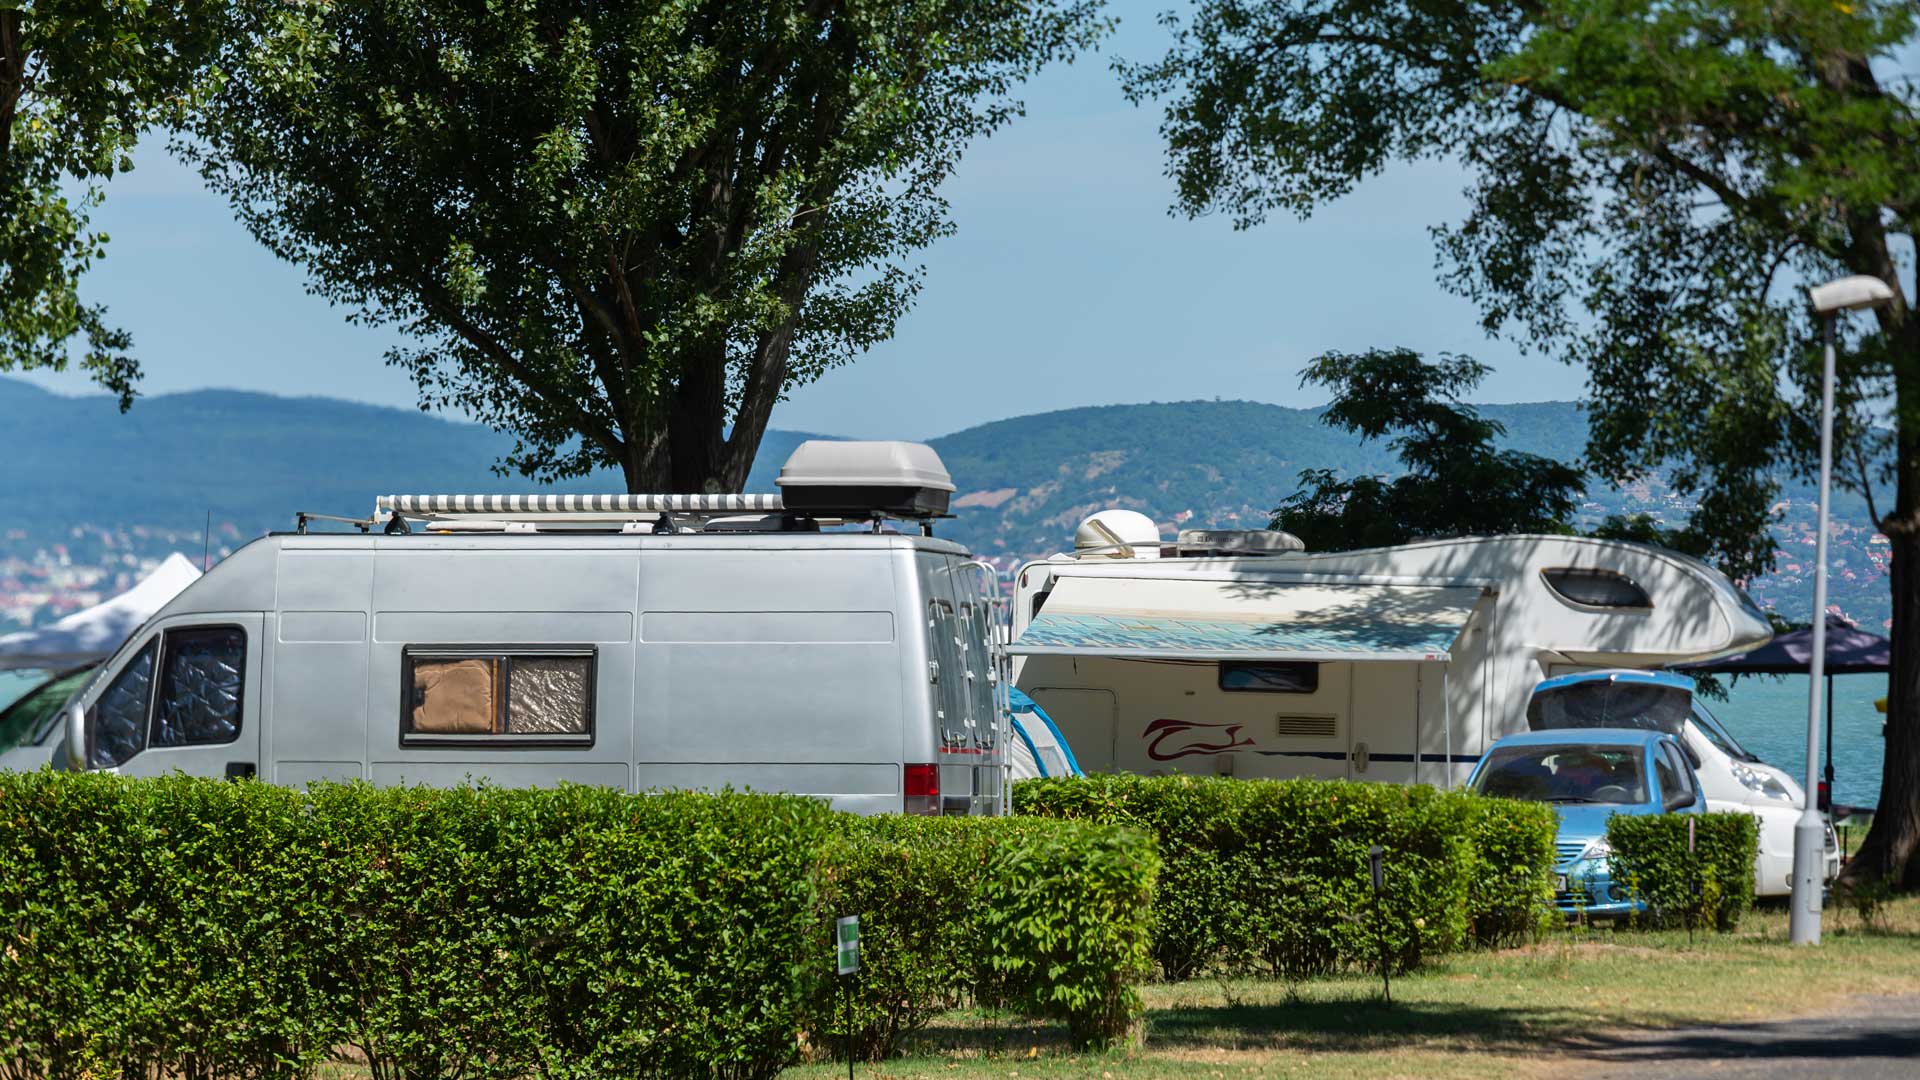 Lakókocsi - Mirabella Camping, Zamárdi, Balaton